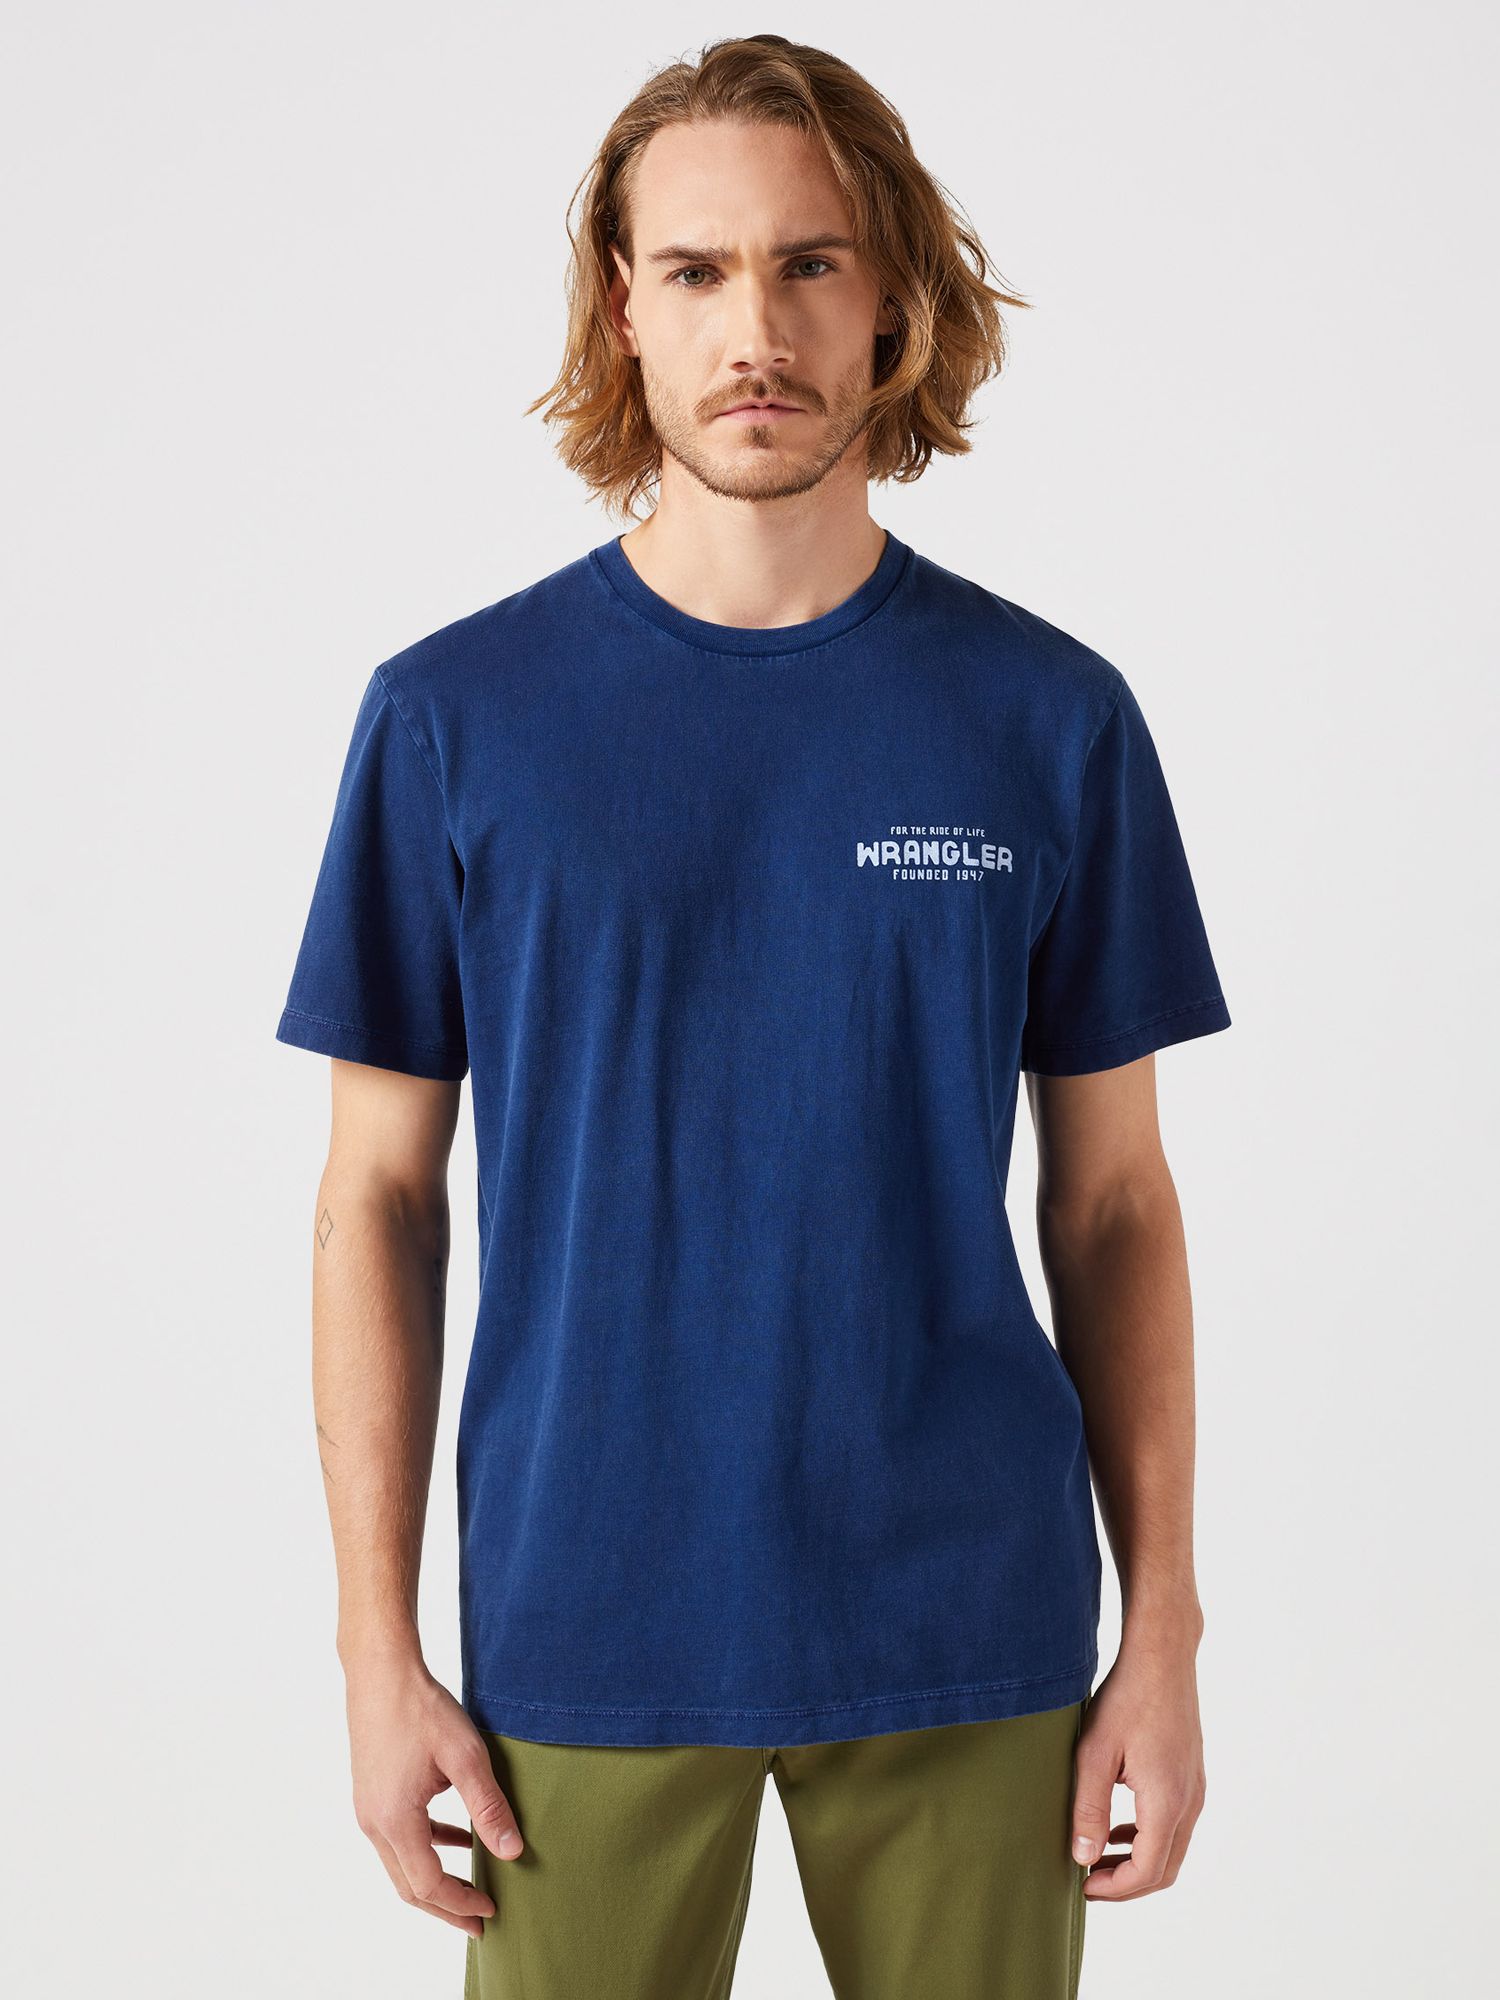 Wrangler Small Graphic T-Shirt, Navy, S